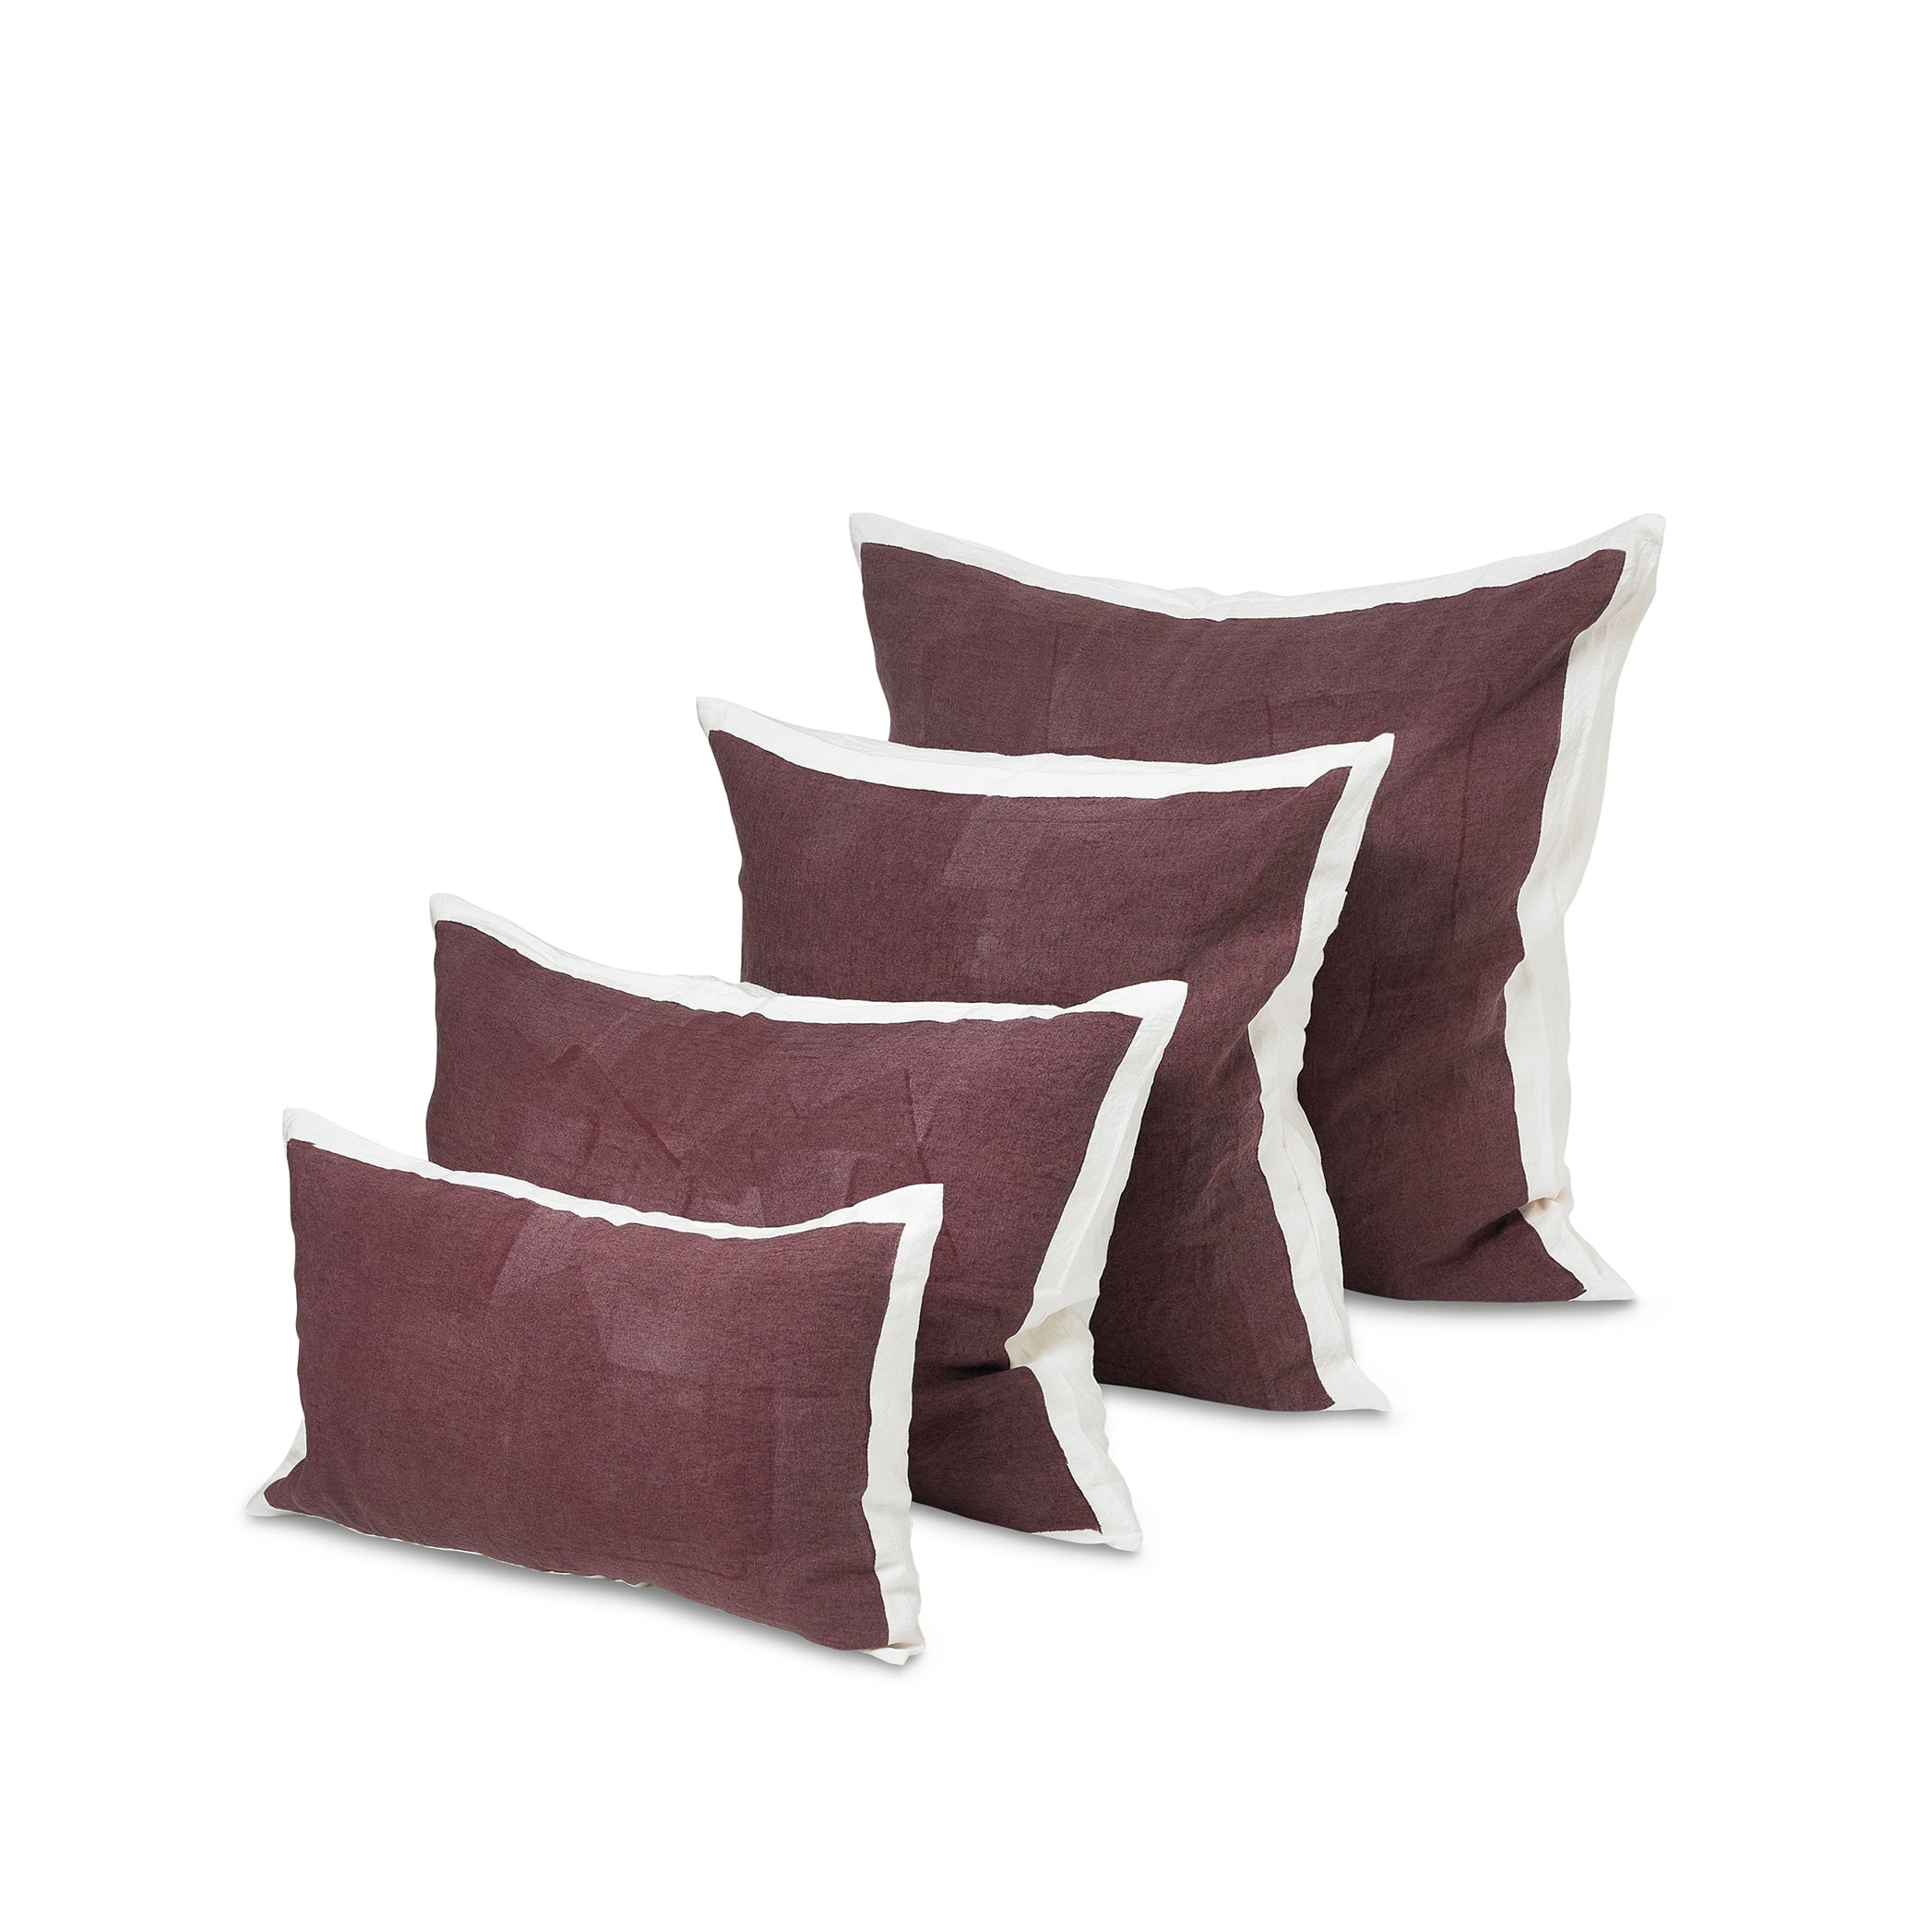 Hand Painted Linen Cushion in Grape, 60cm x 60cm